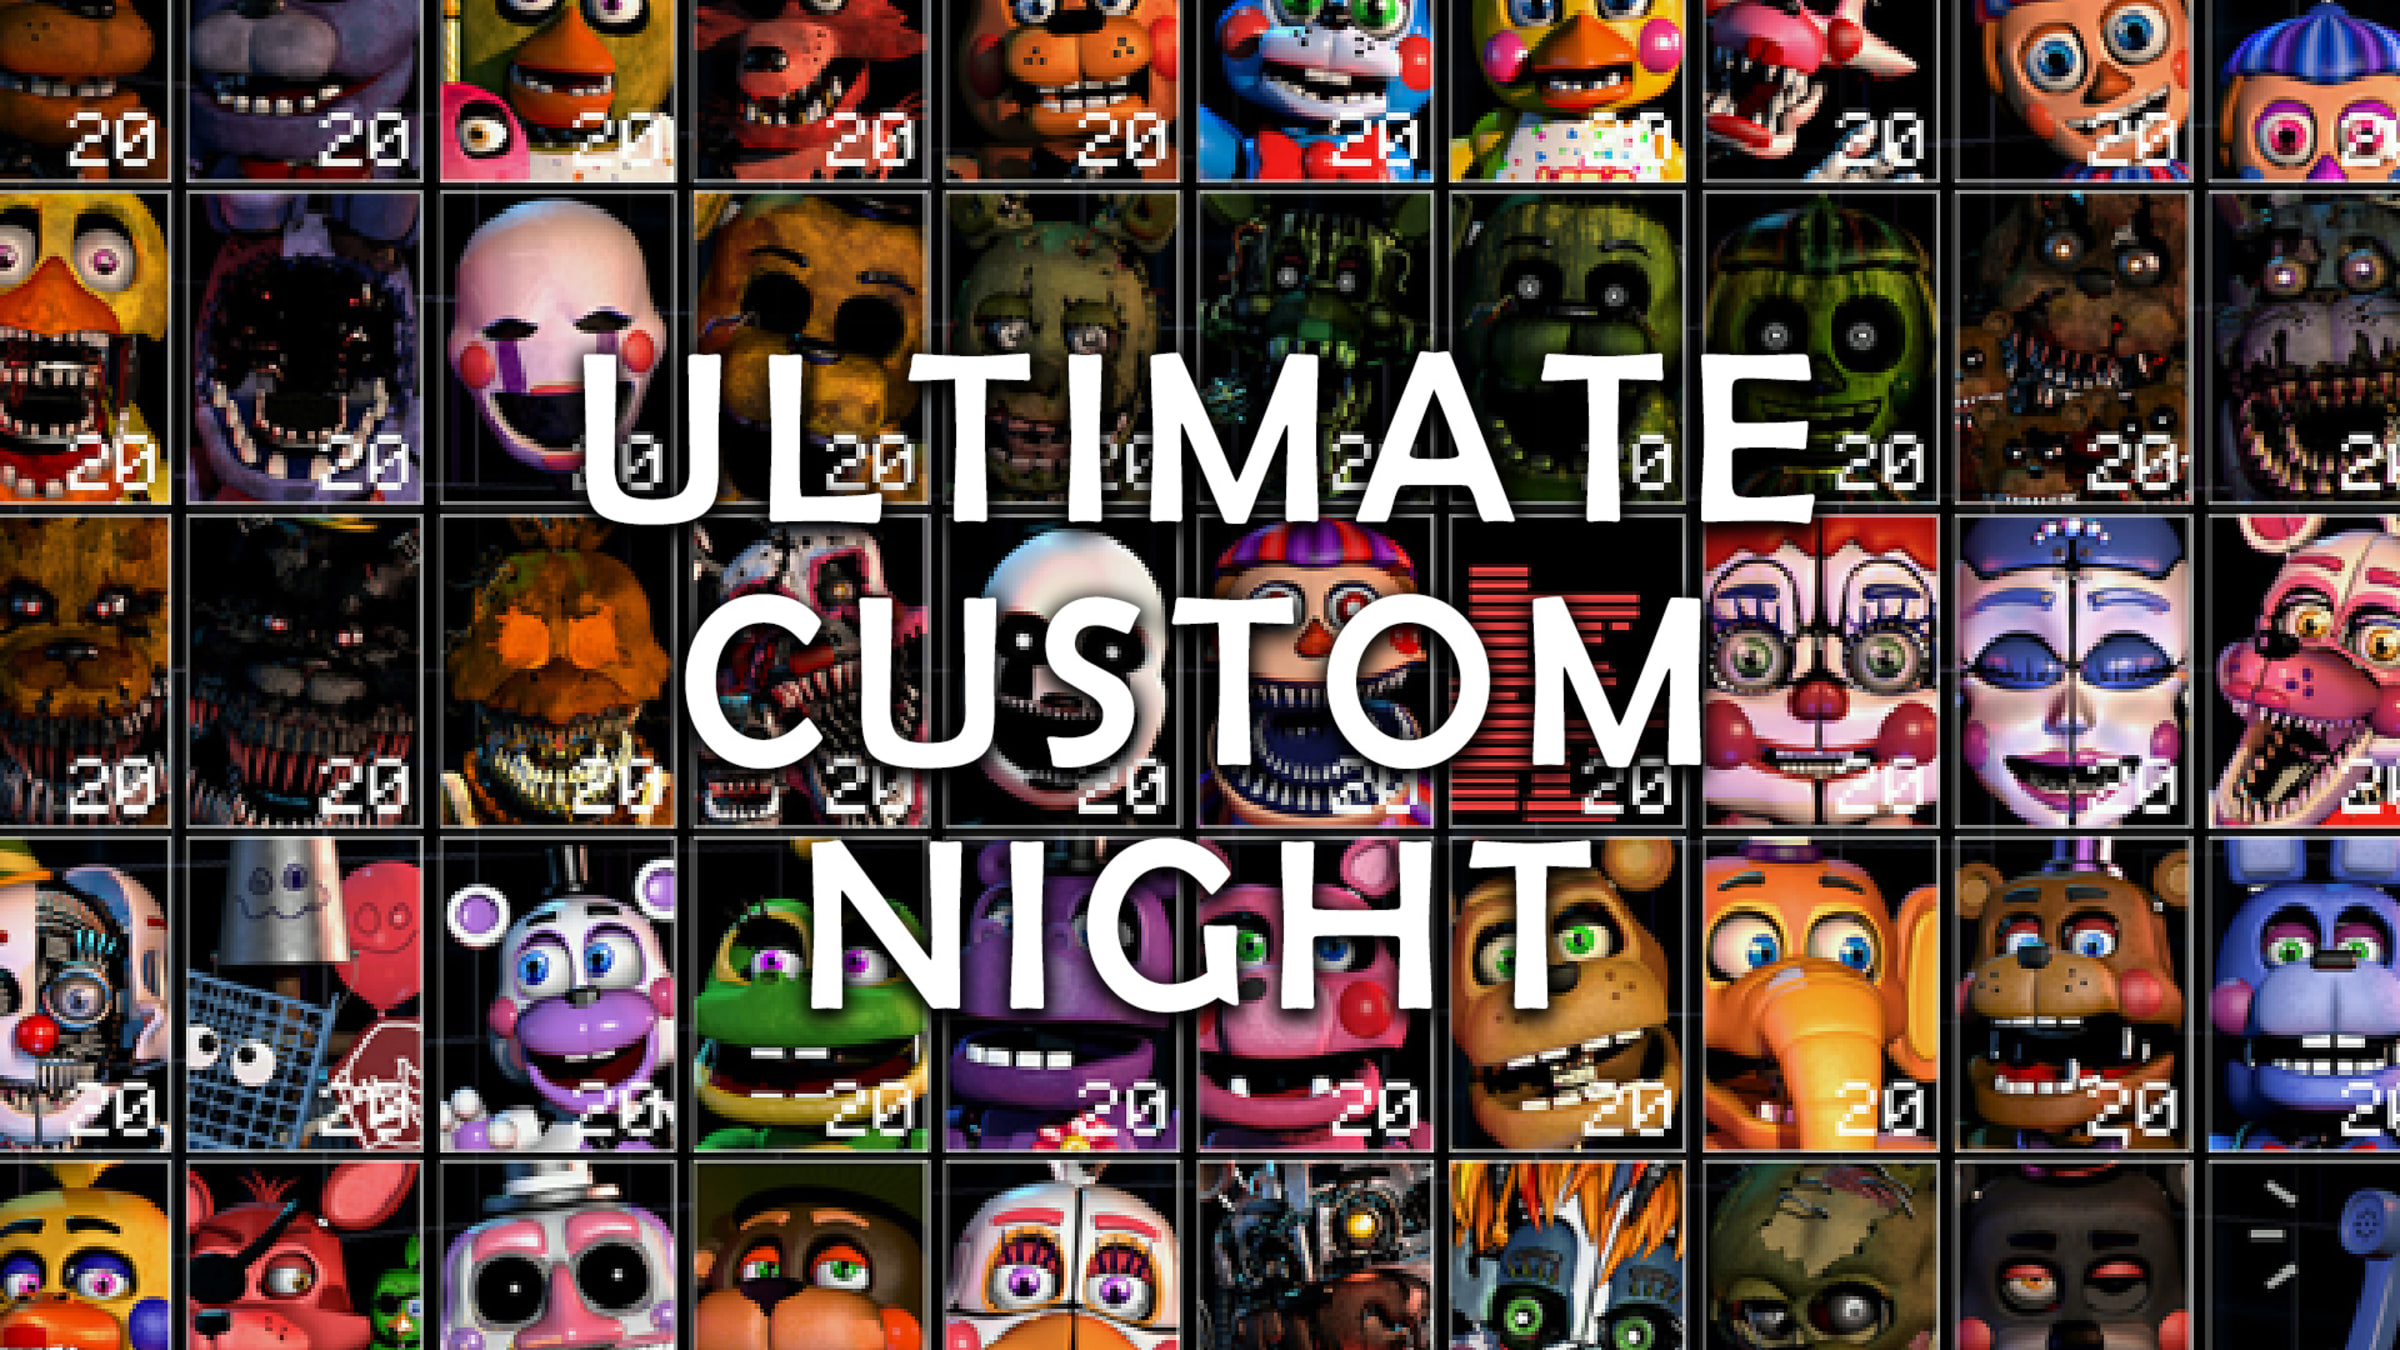 Ultimate custom night аниматроники. ФНАФ ультимейт Custom Night. Фредди 7 ультимейт кастом Найт. ФНАФ 7 Ultimate Custom Night Фредди. Пять ночей с Фредди ультимейт кастом Найт.